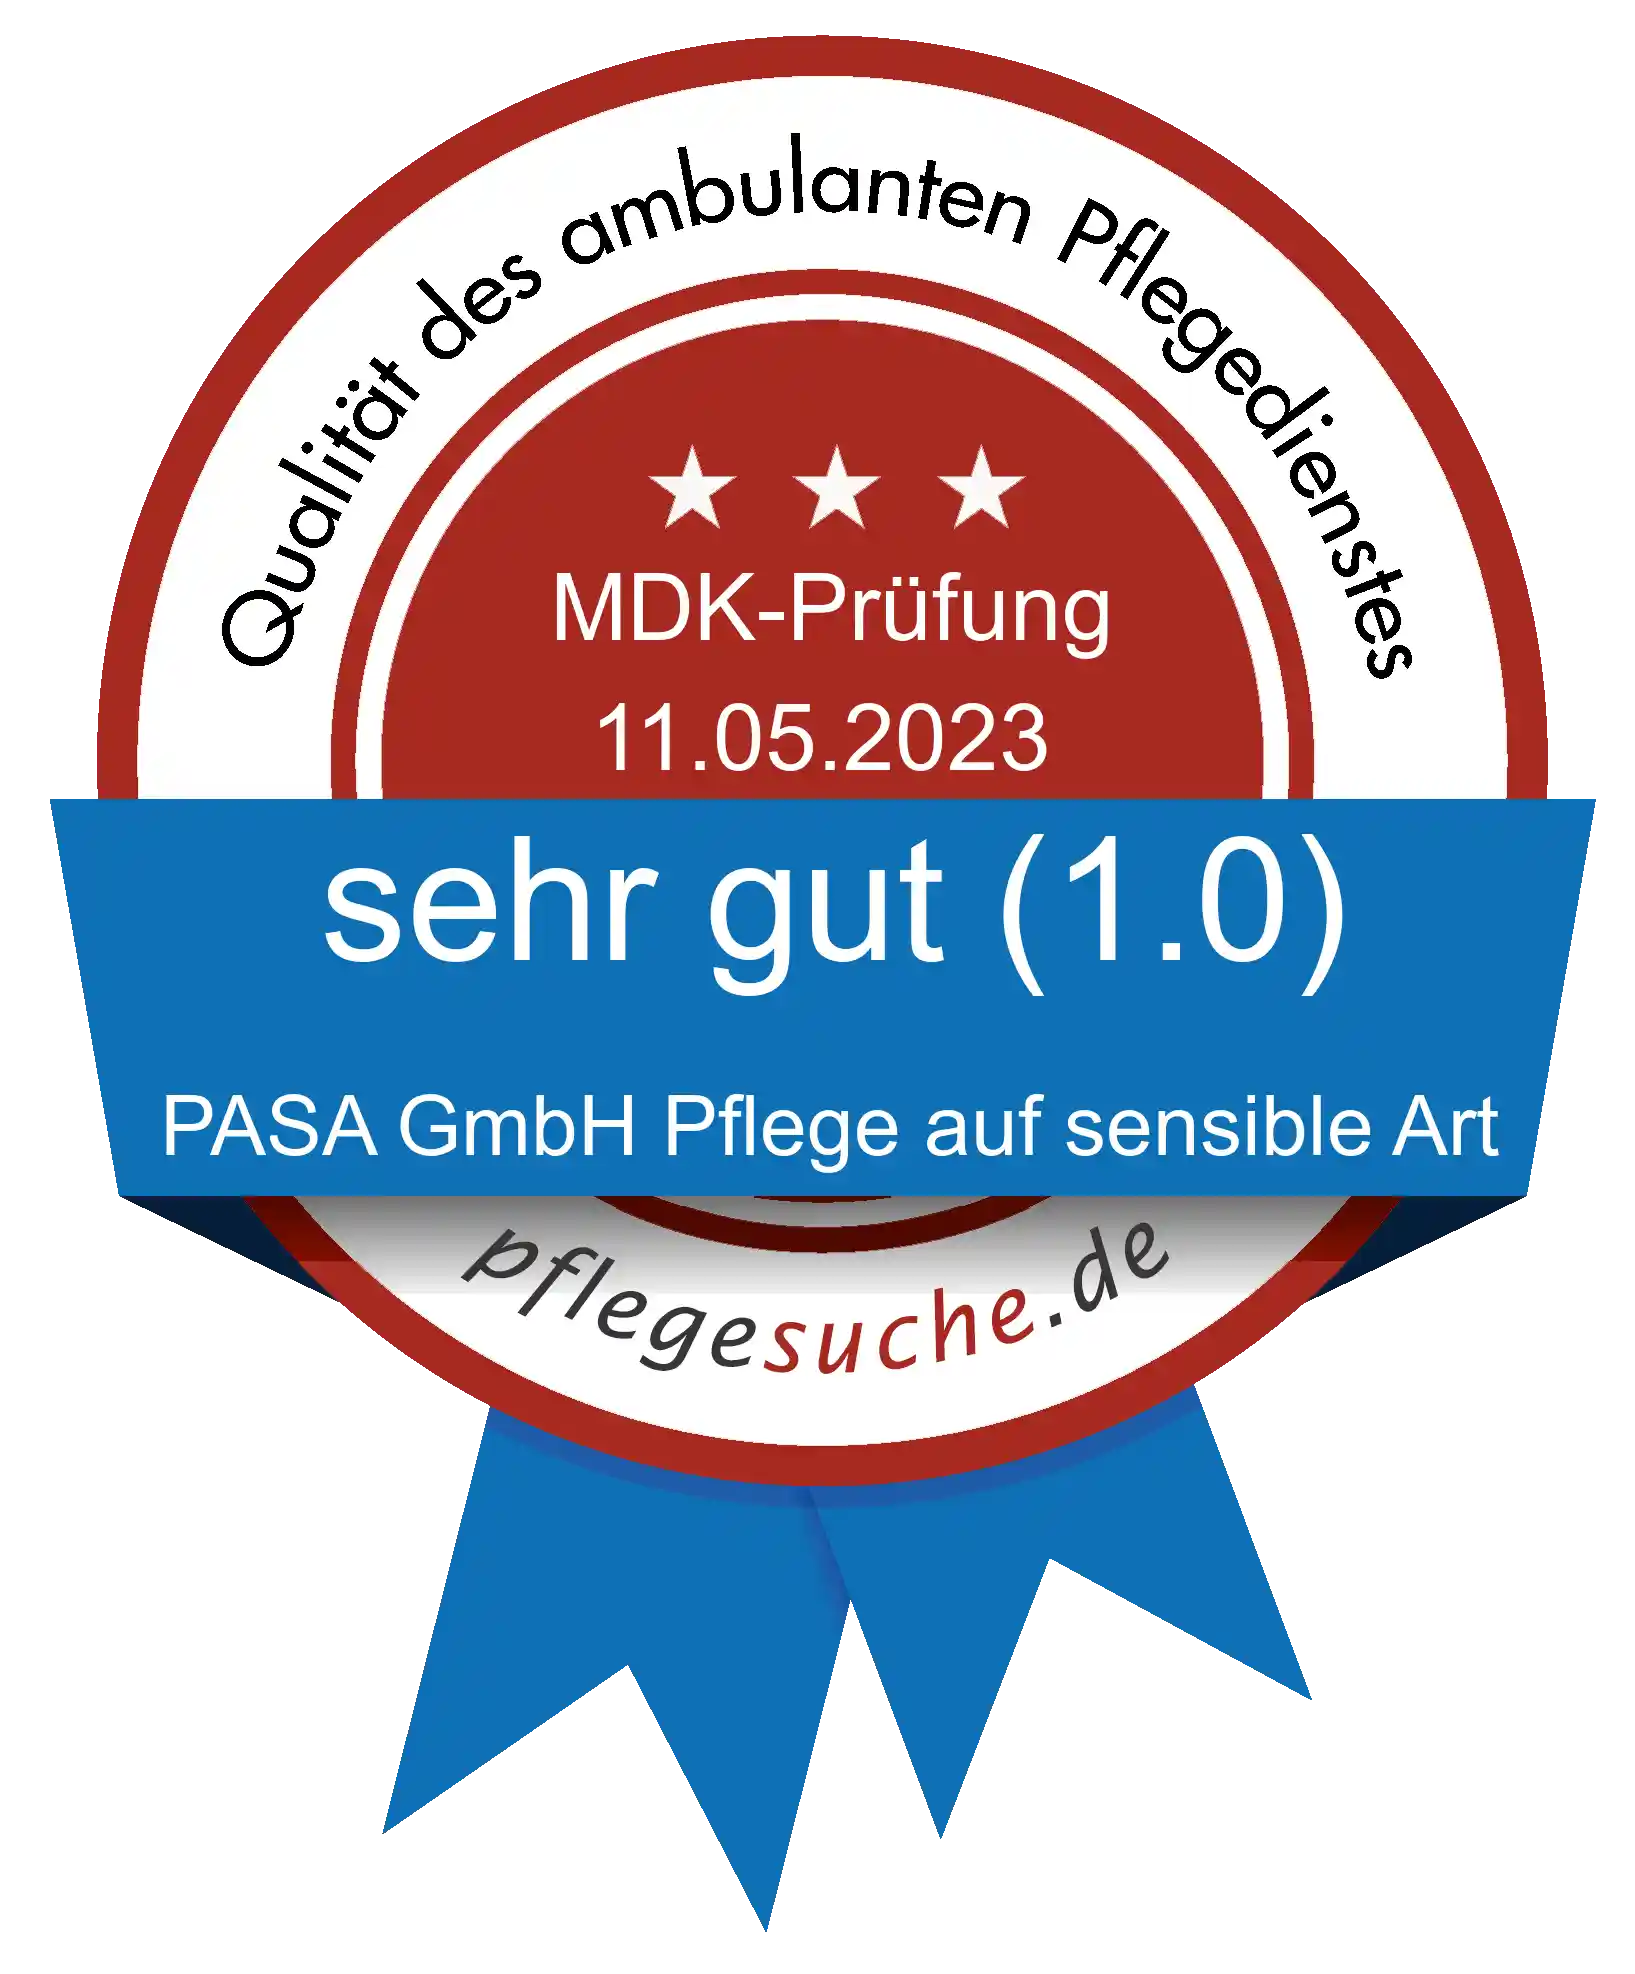 Siegel Benotung: PASA GmbH Pflege auf sensible Art